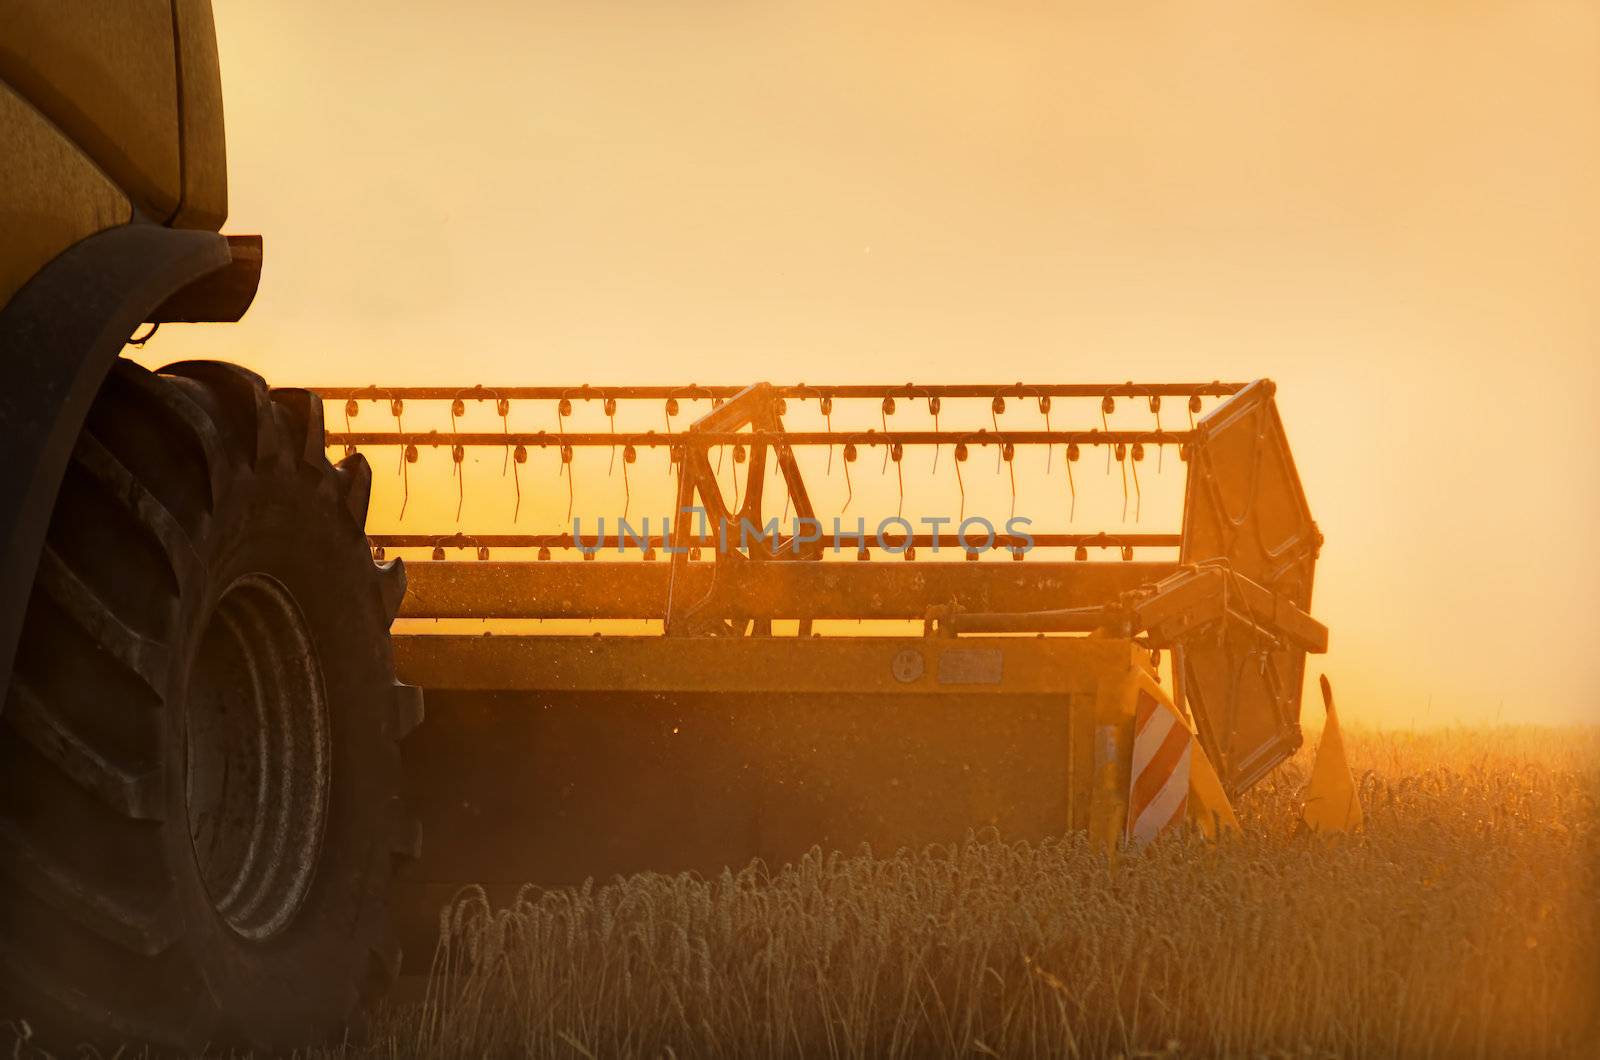 a combine harvester